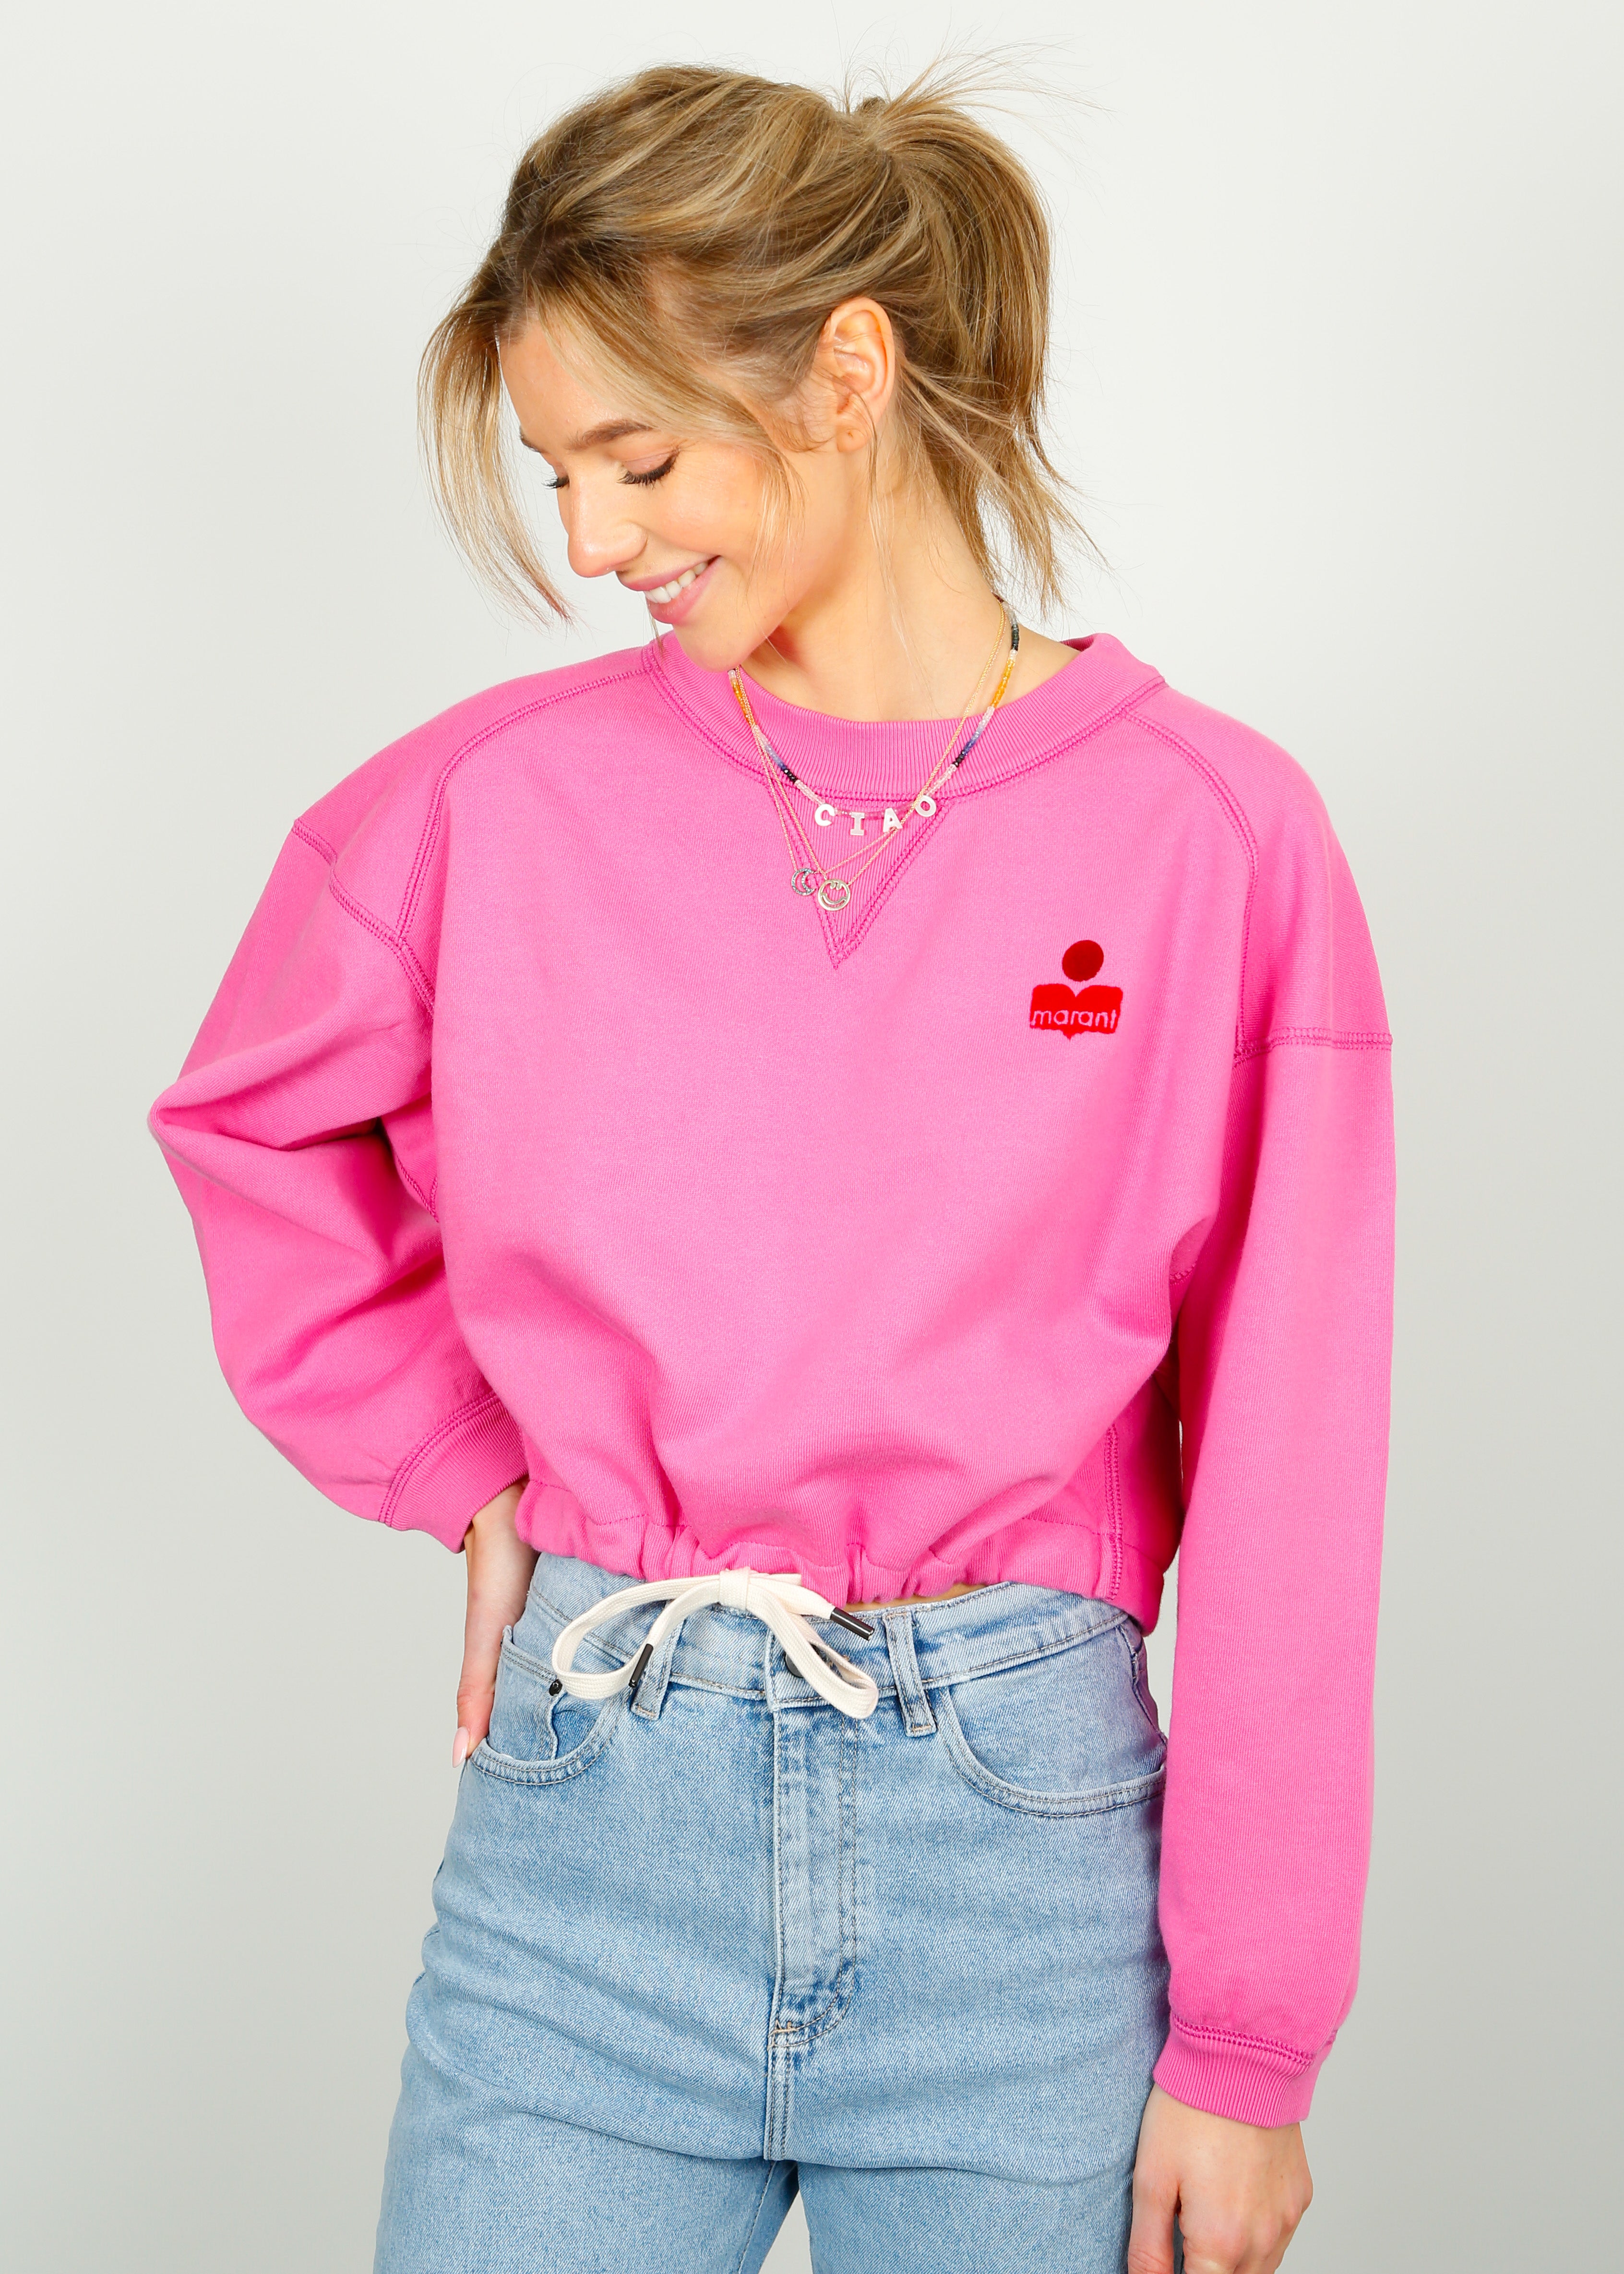 IM Margo Sweatshirt Top in Pink